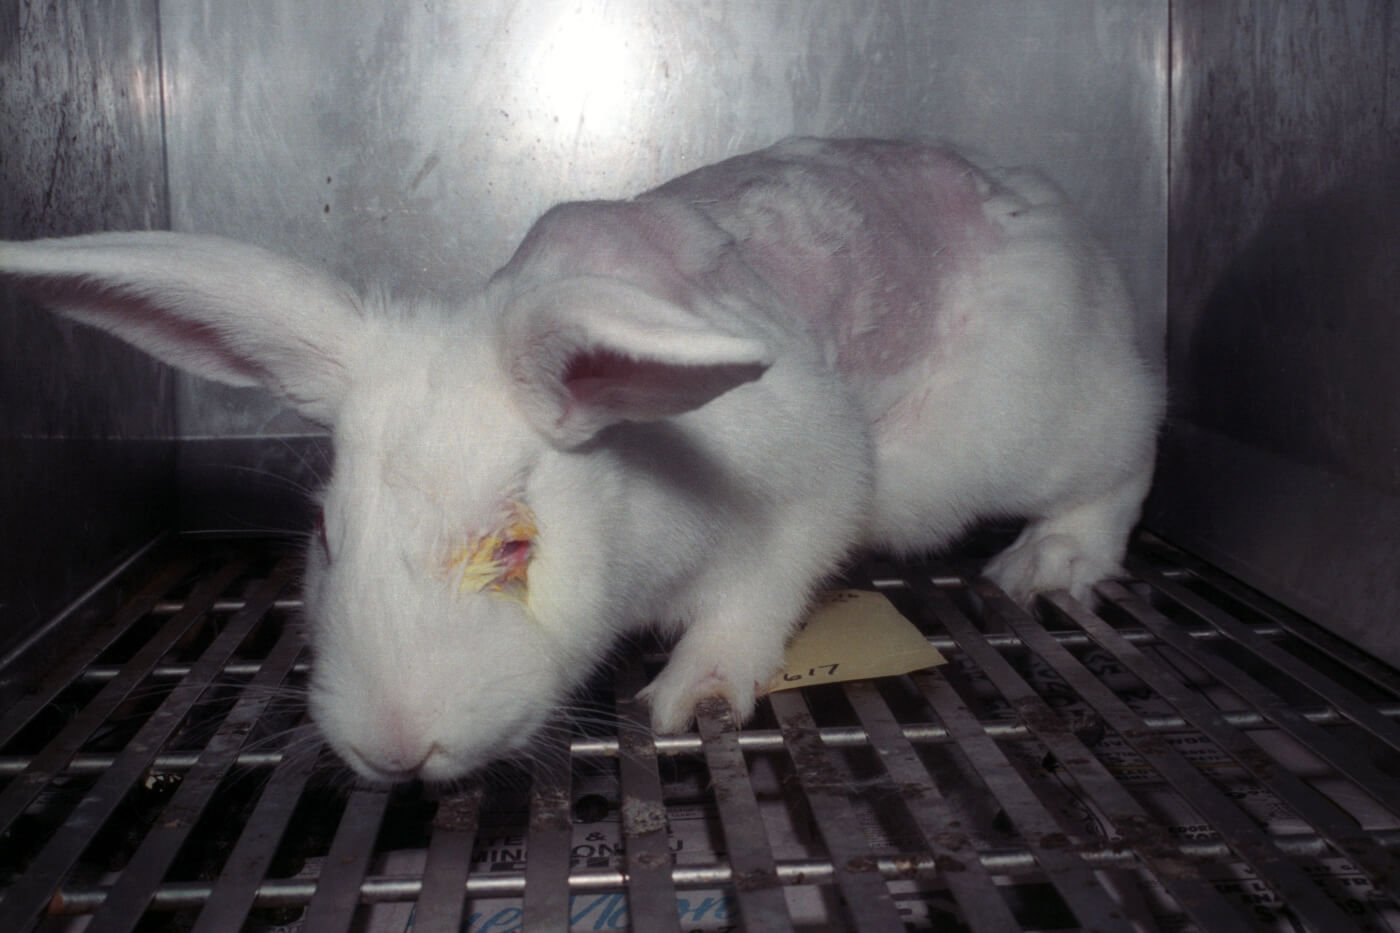 peta scientists use webinars to reduce reliance on animal testing